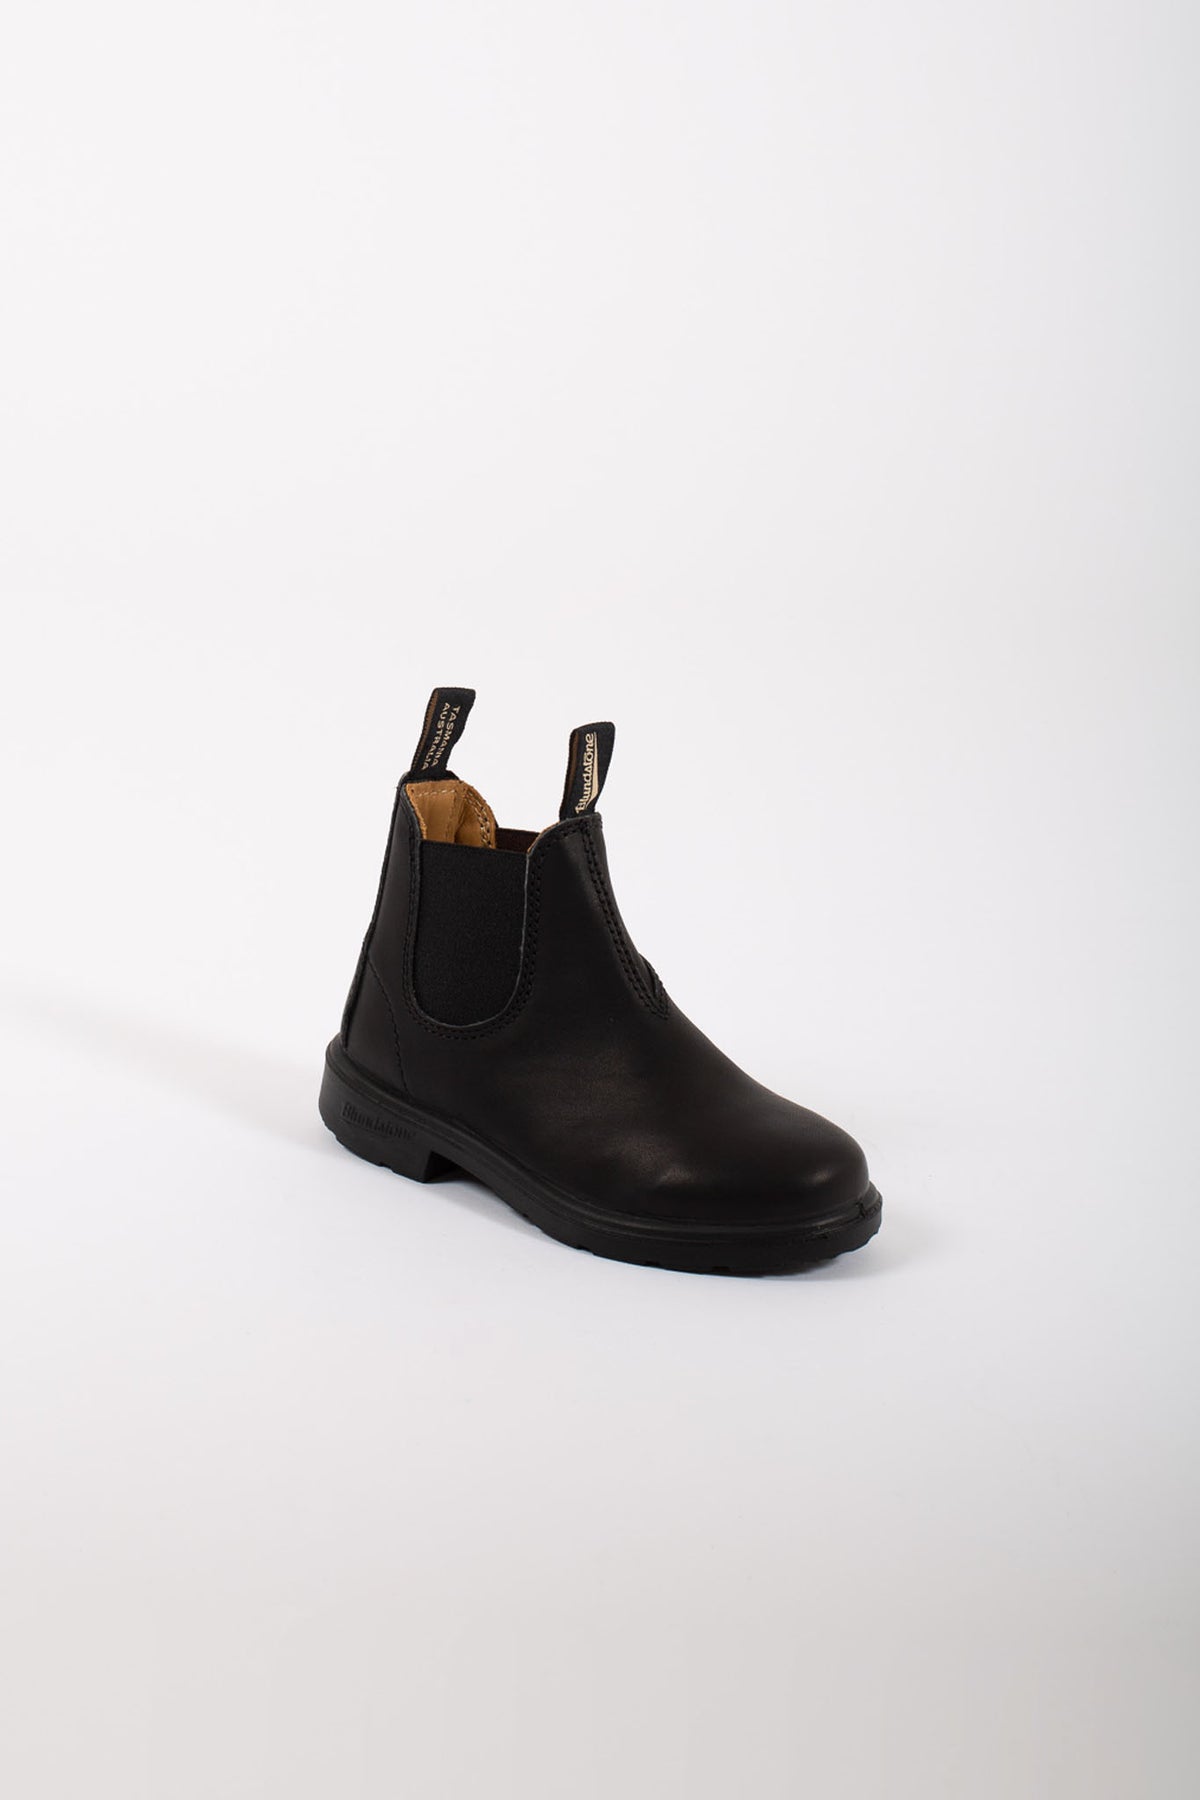 Blundstone Boot Black Premium Leather Nero Unisex Bambini - 2